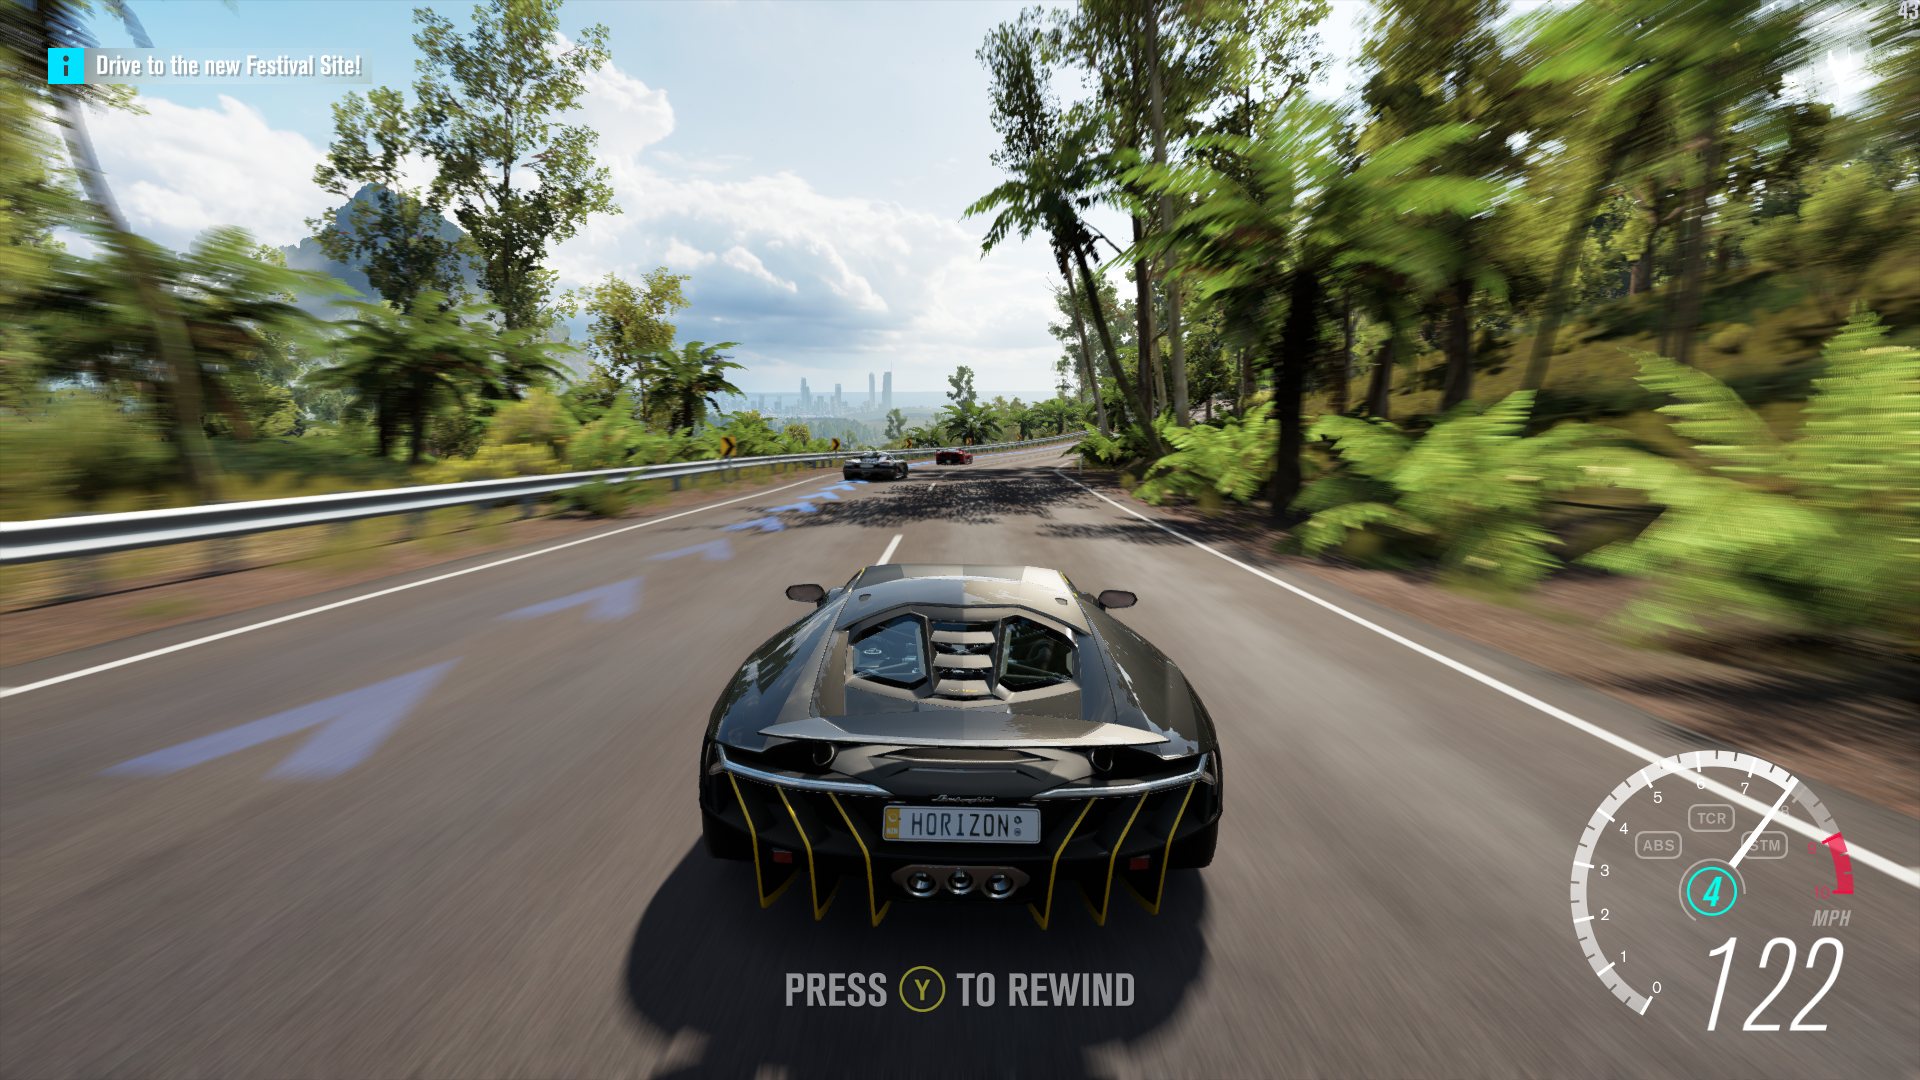 Amazing Forza Horizon 3 Pictures & Backgrounds